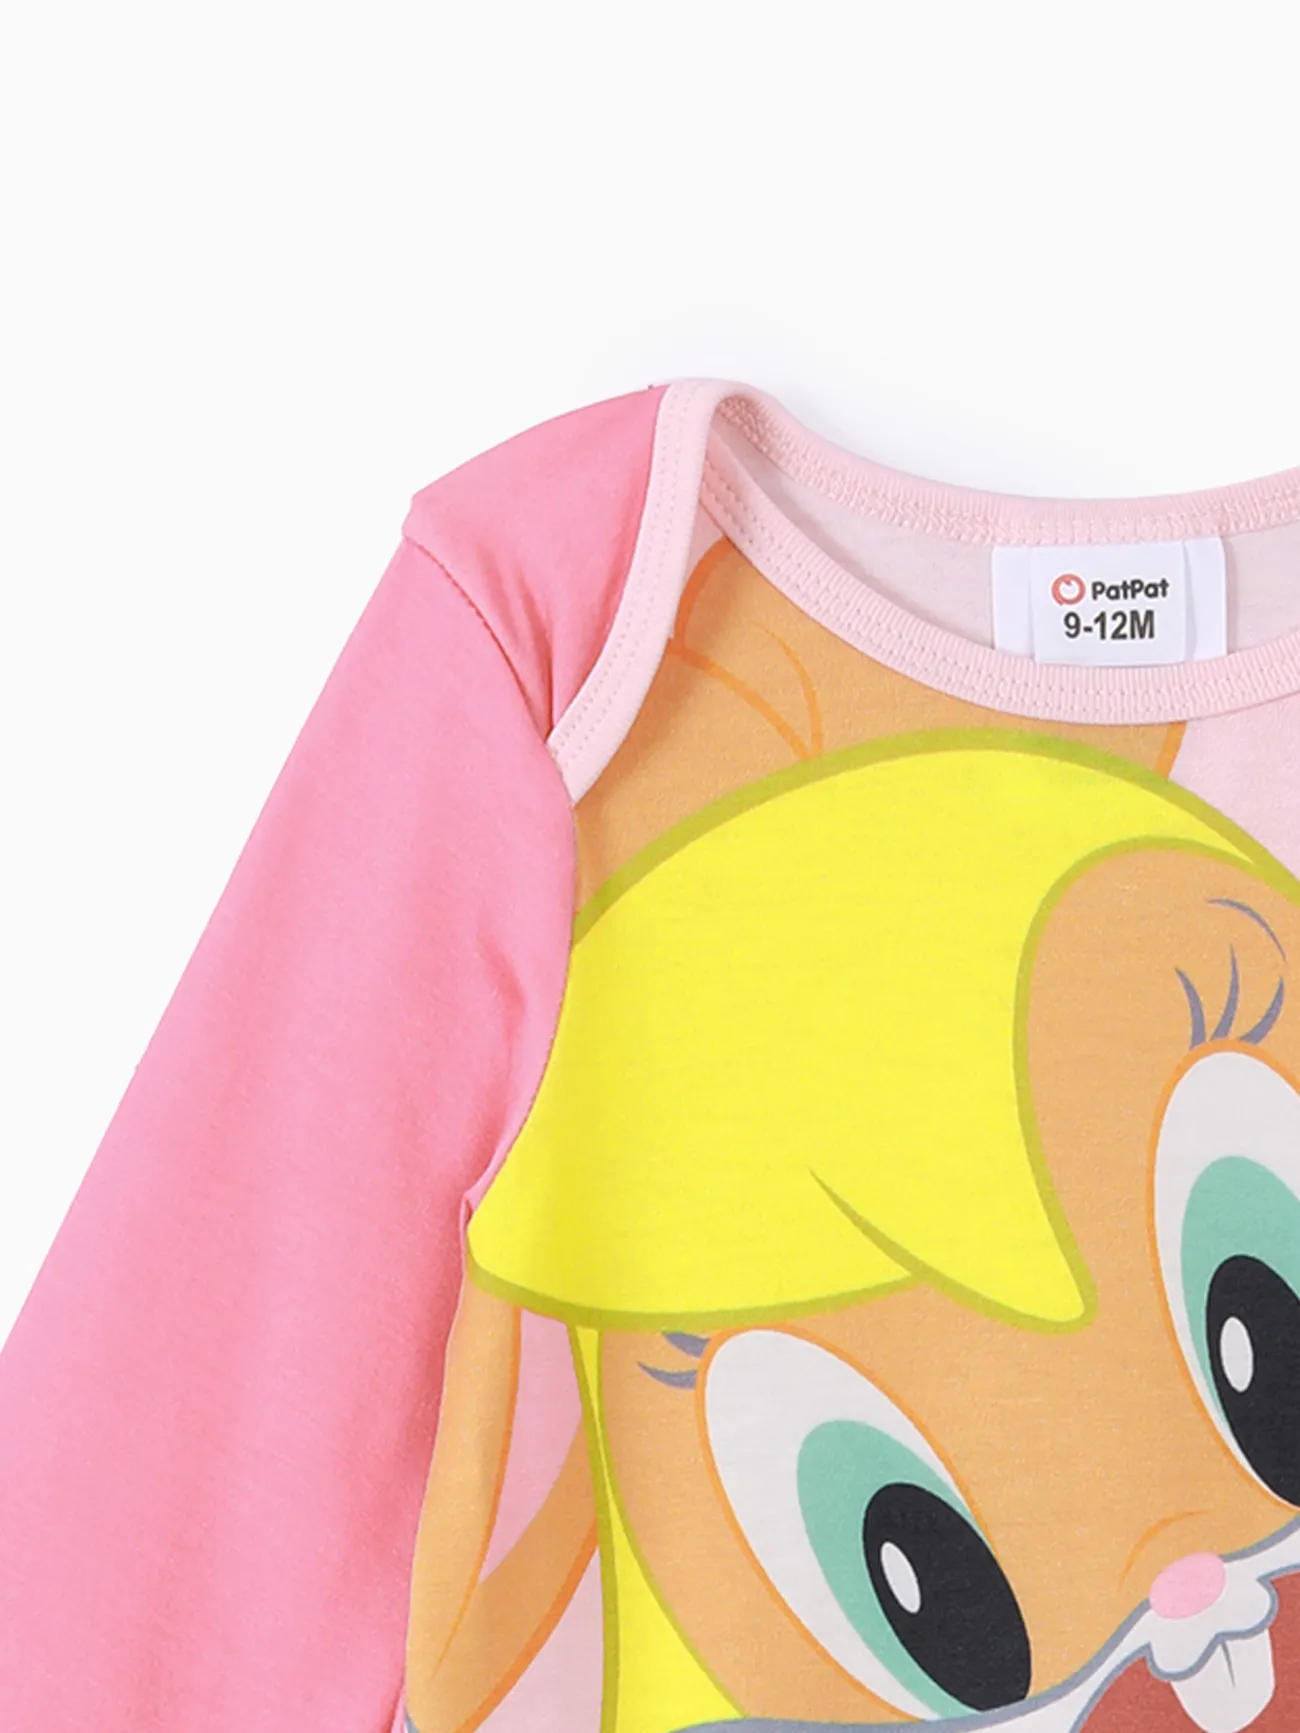 Looney Tunes Baby Boy/Girl Cartoon Animal Print Long-sleeve Naia™ Jumpsuit Pink big image 1